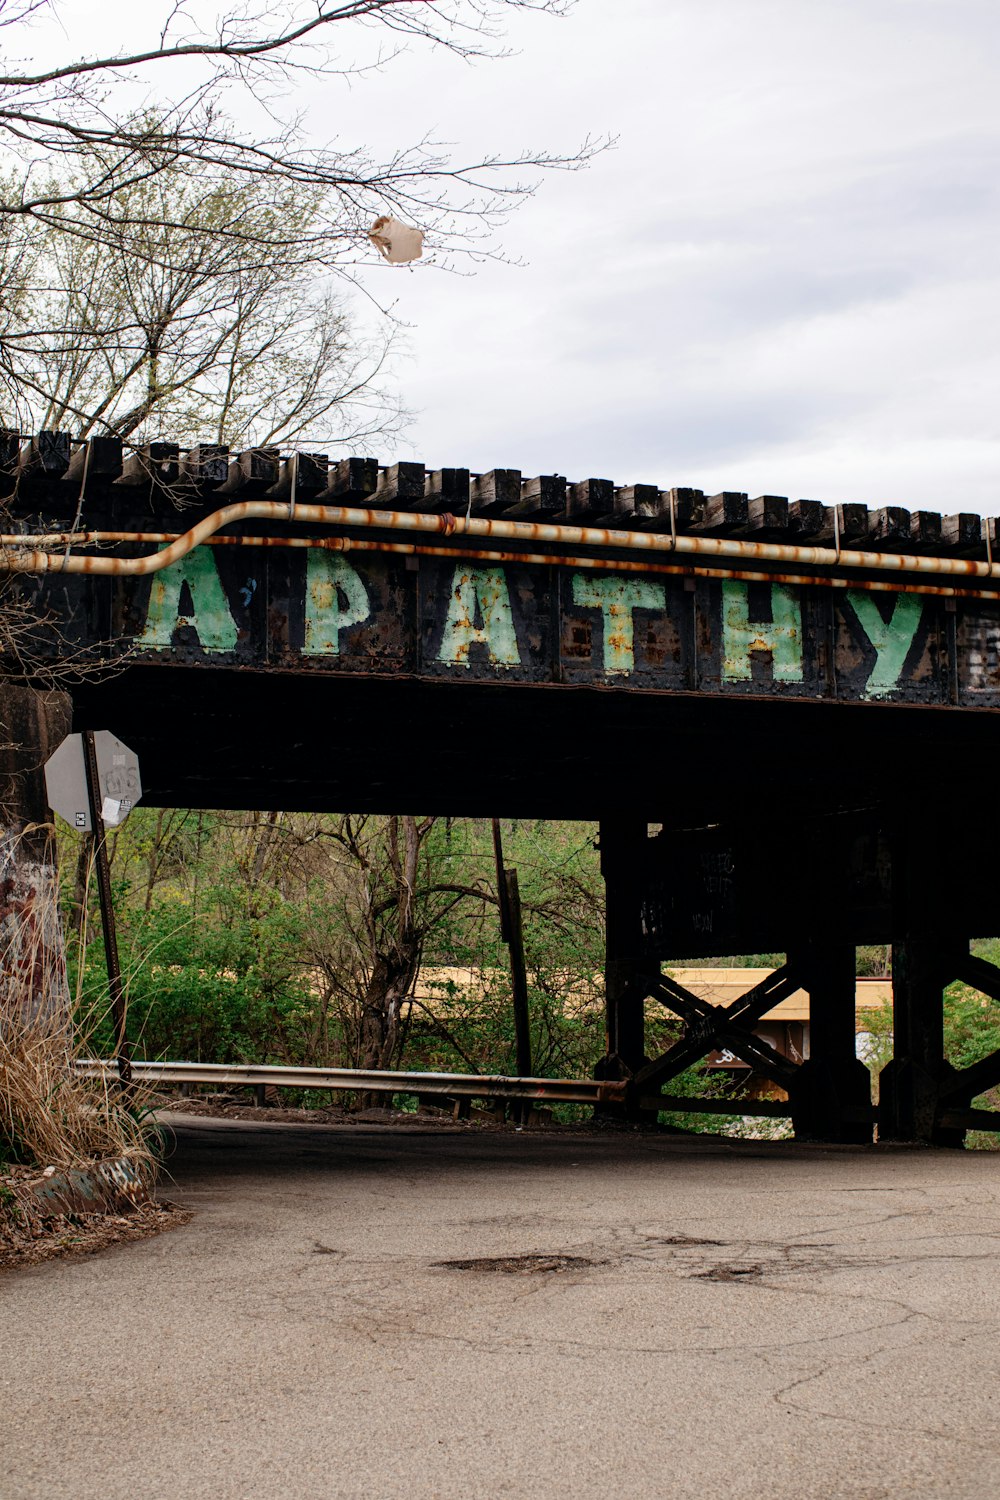 a train bridge that has graffiti on it